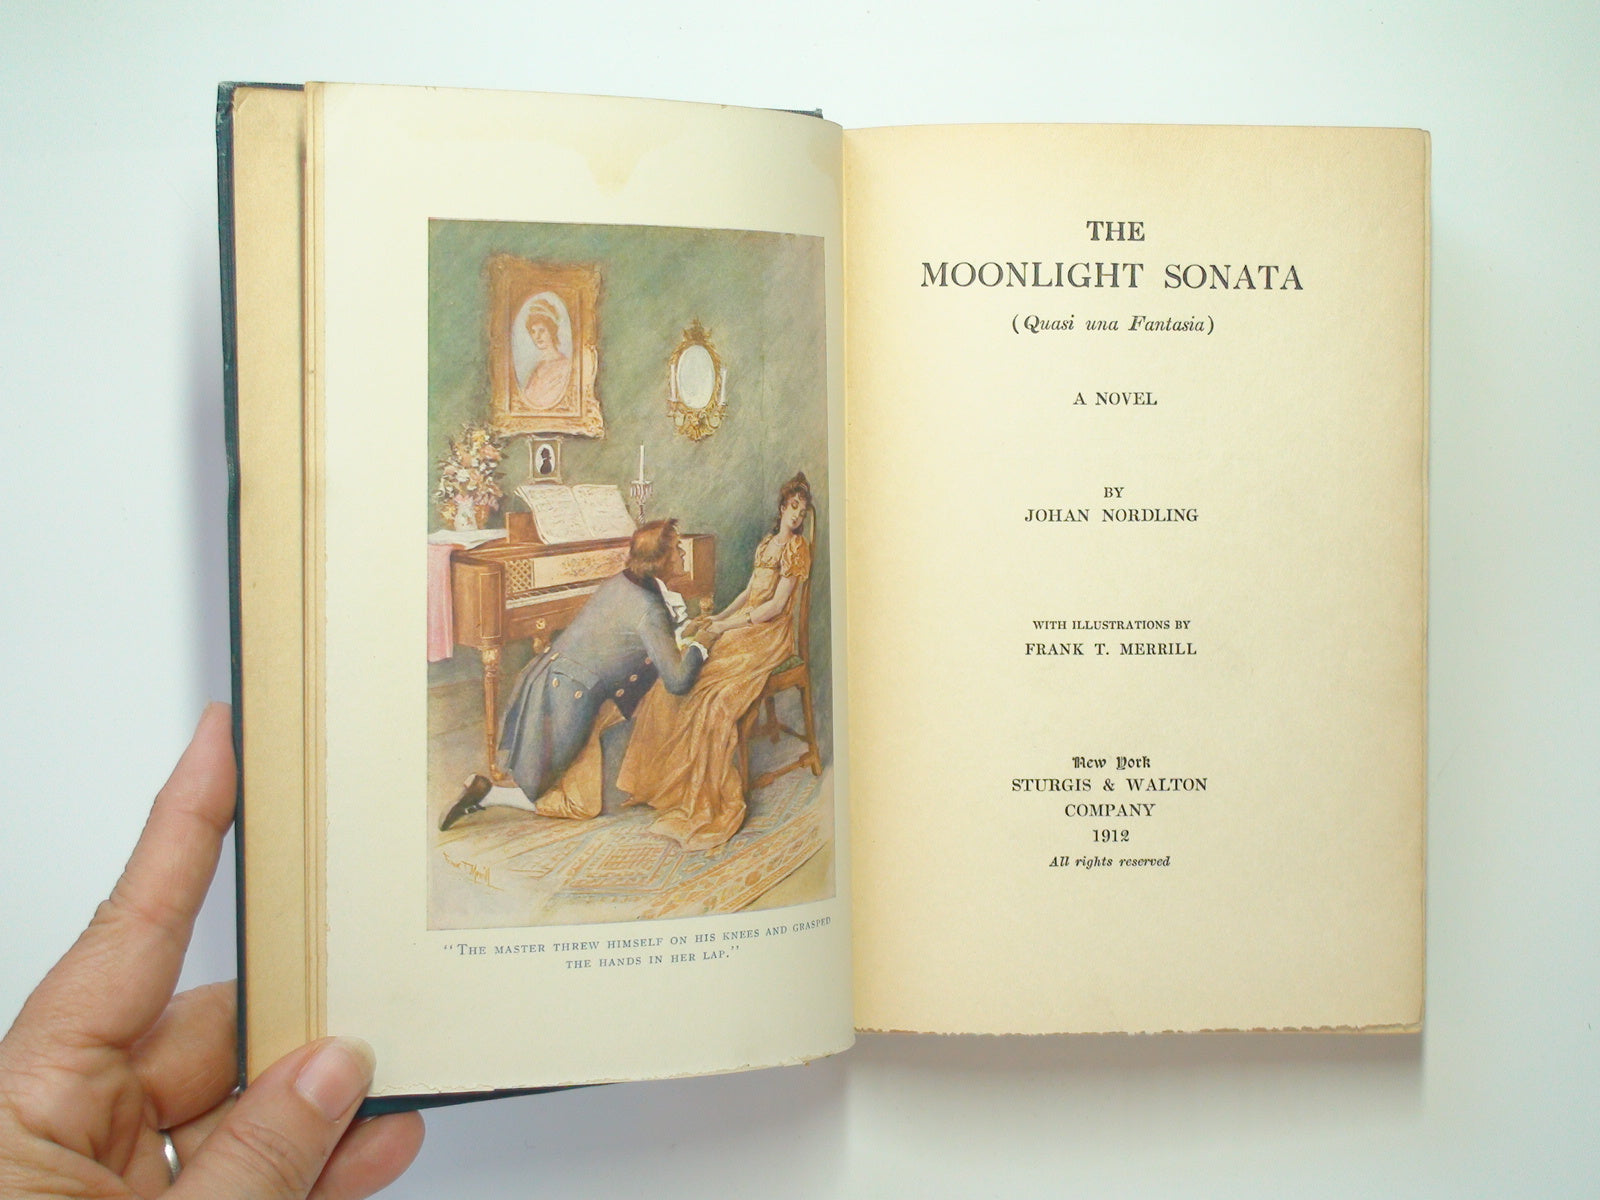 The Moonlight Sonata, by Johan Nordling, A Romance, 1913